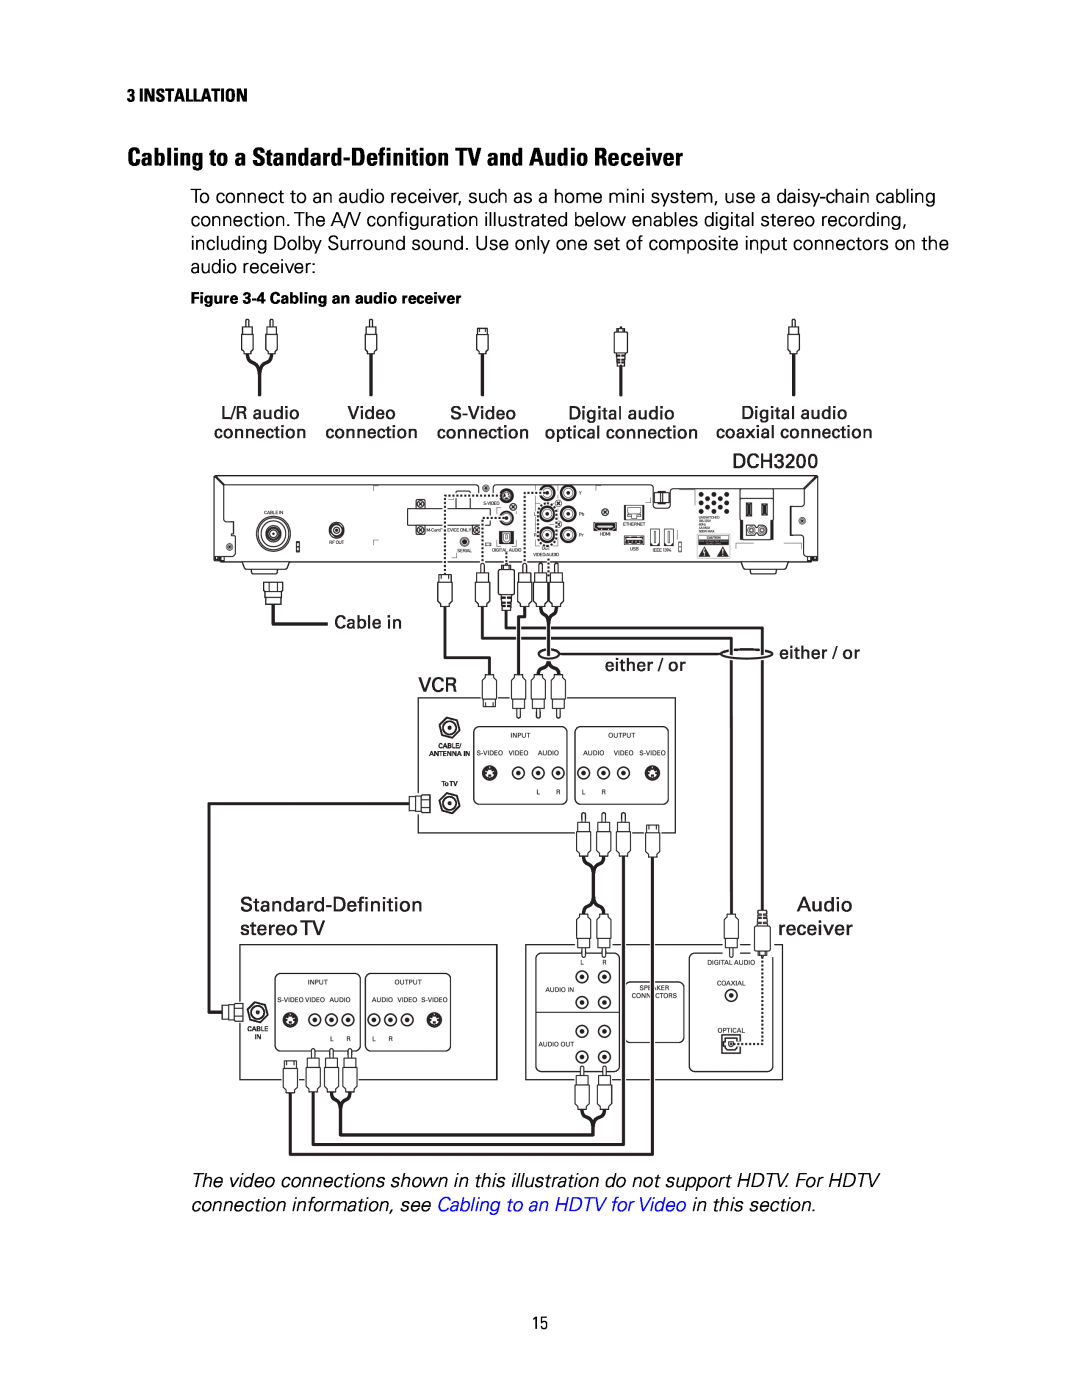 Motorola DCH3200 installation manual 4Cabling an audio receiver 